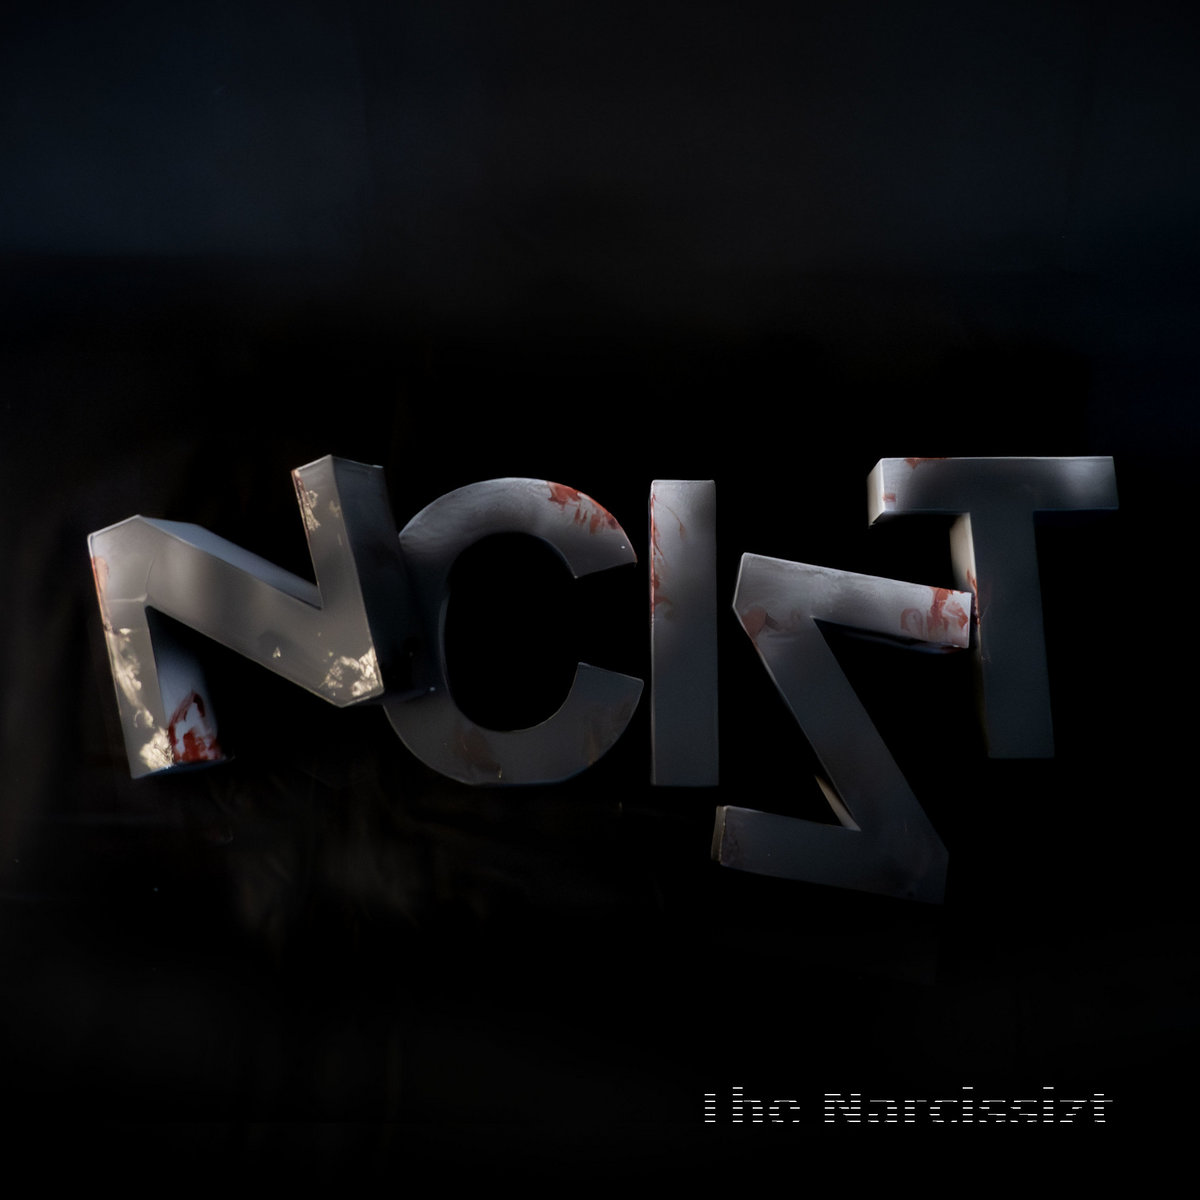 TraKKtor - The Narcissizt